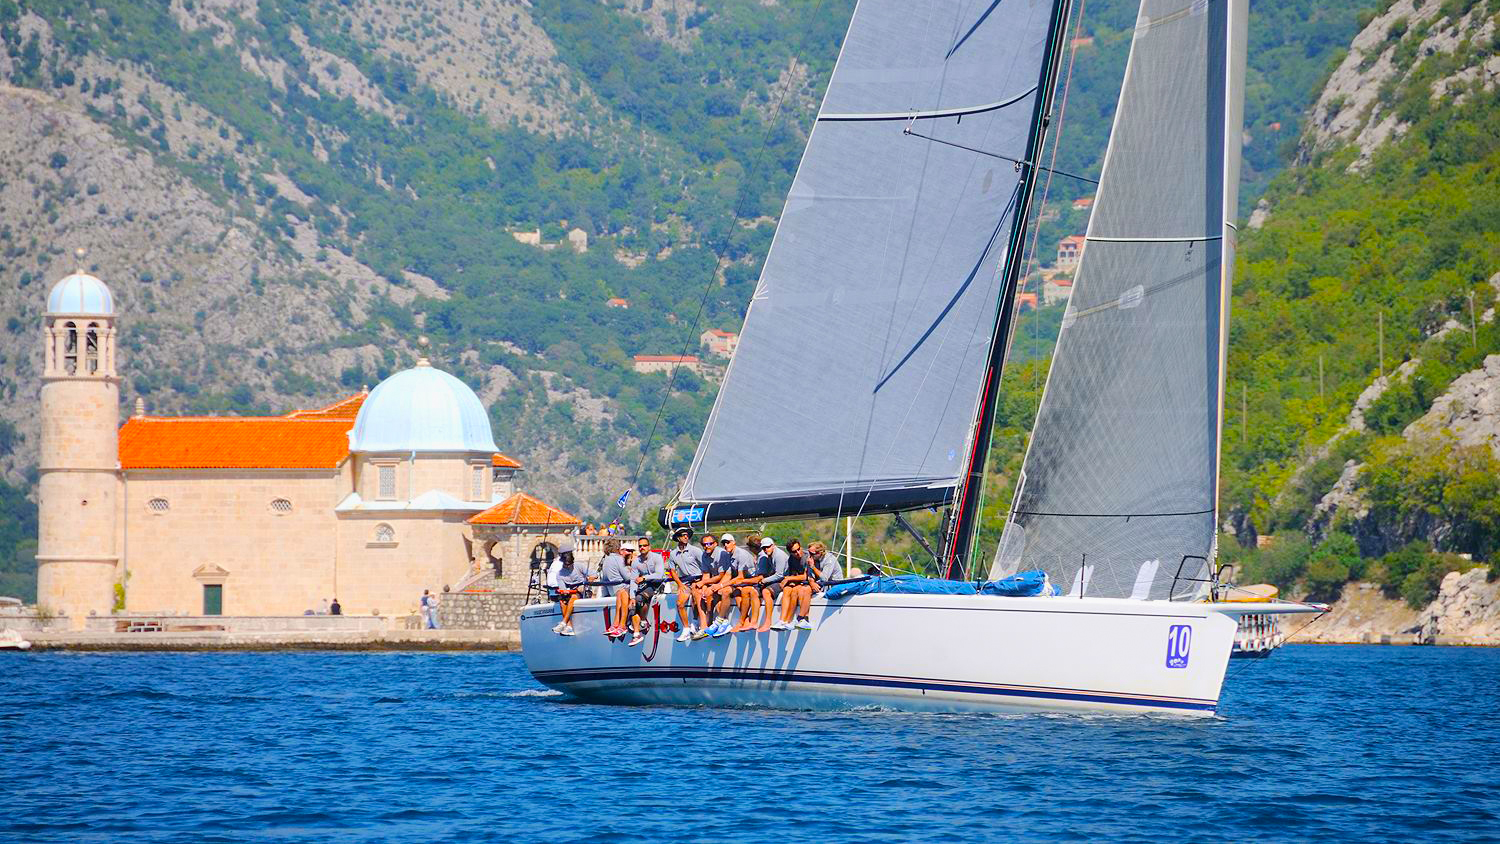 wild-joe-maxi60-porto-montenegro-sailing-thousand-islands-race-vitorlas-verseny-jozsa-marton-fifty-fifty-sailing-hajozashu